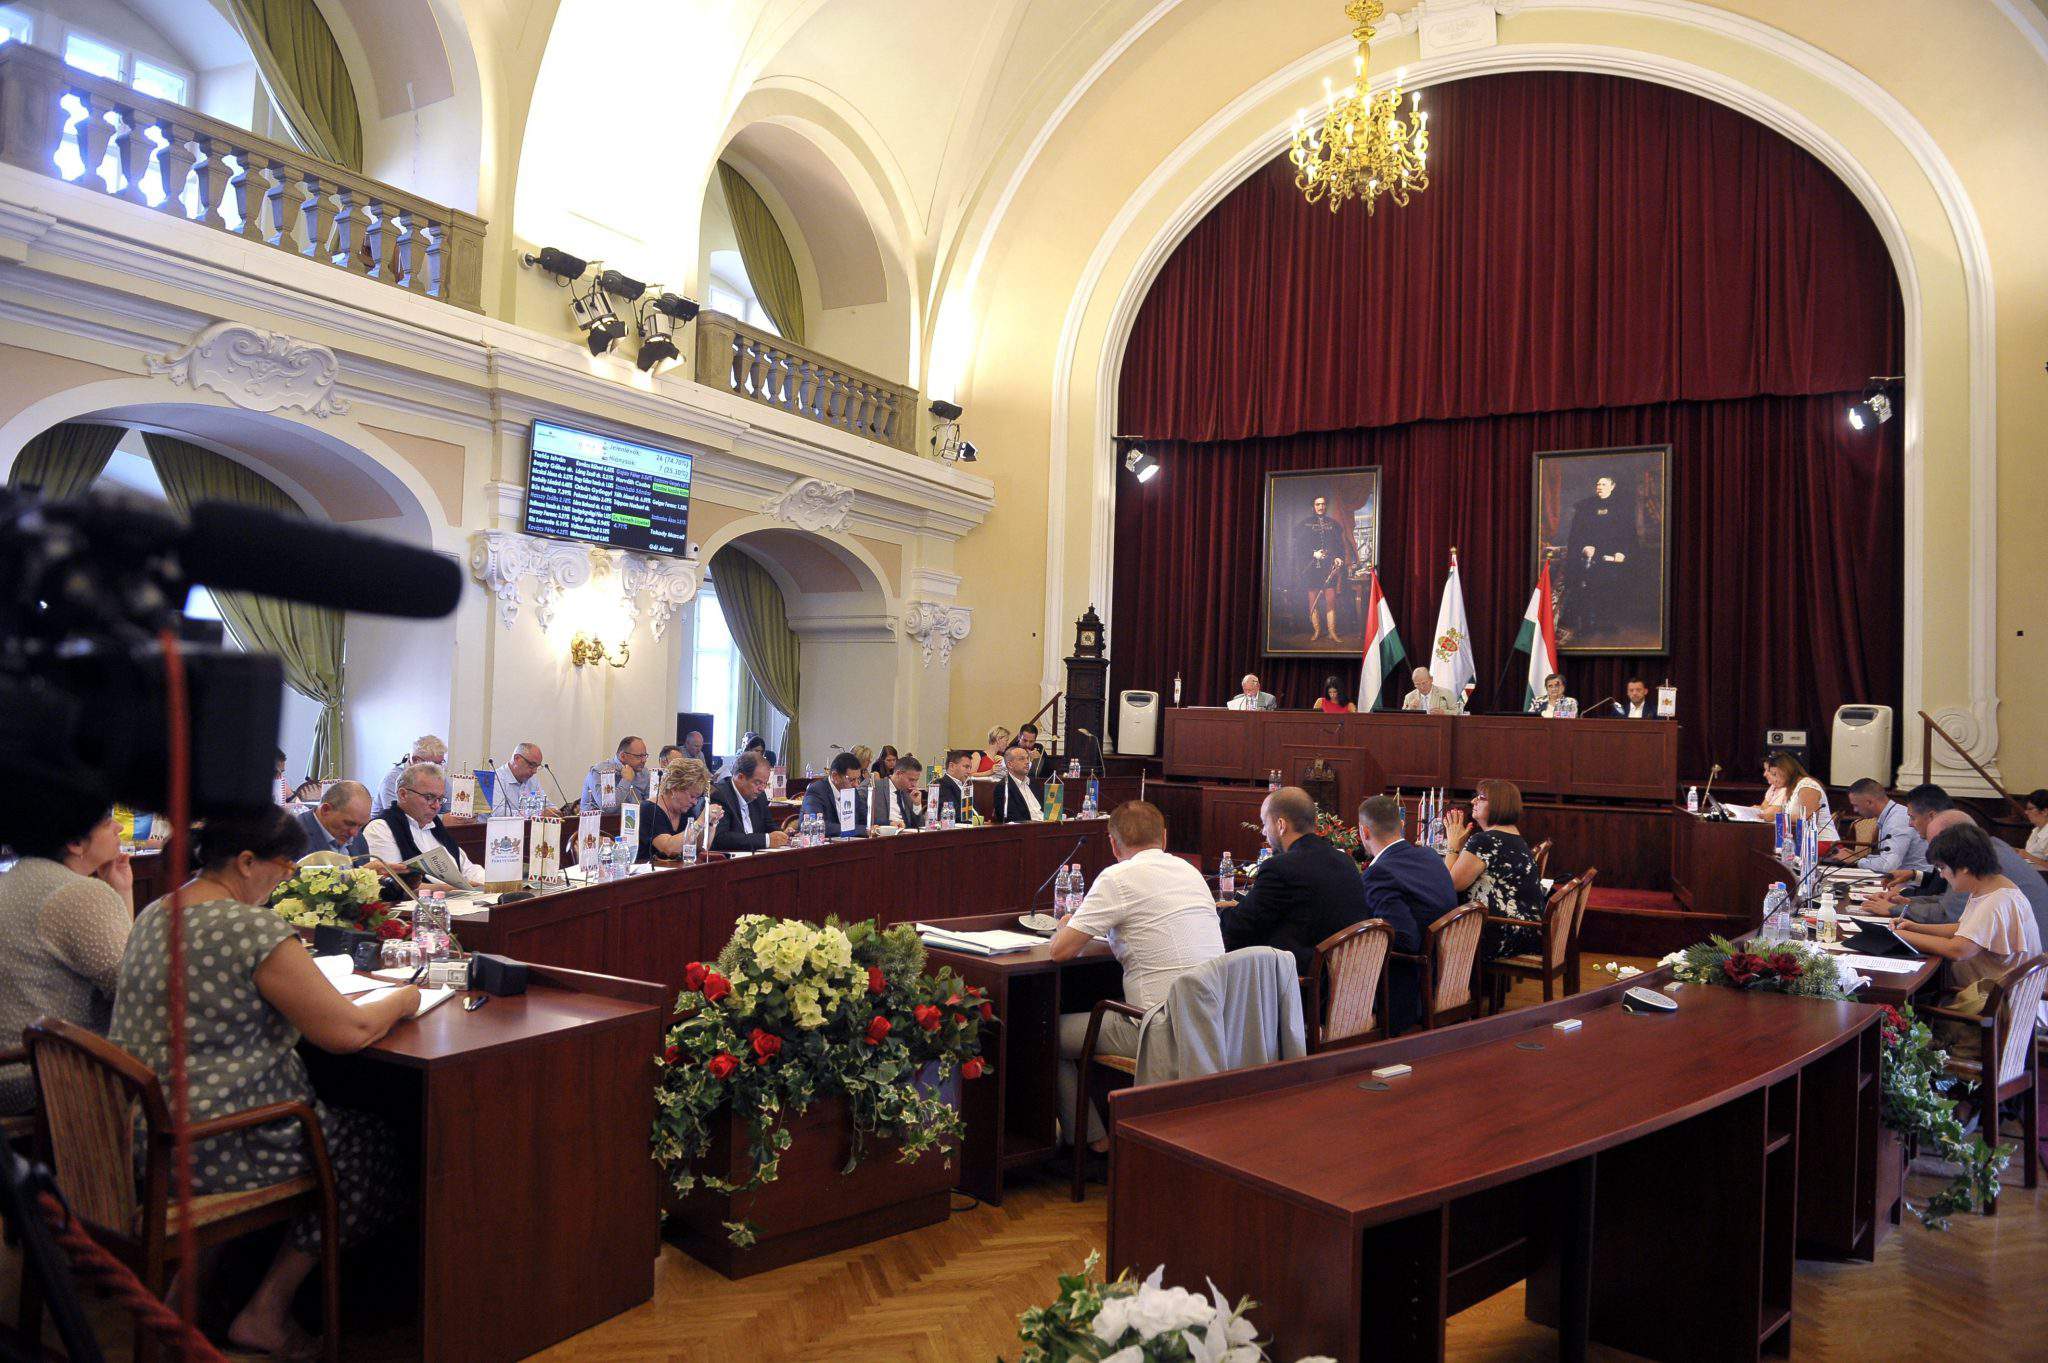 Budapest council